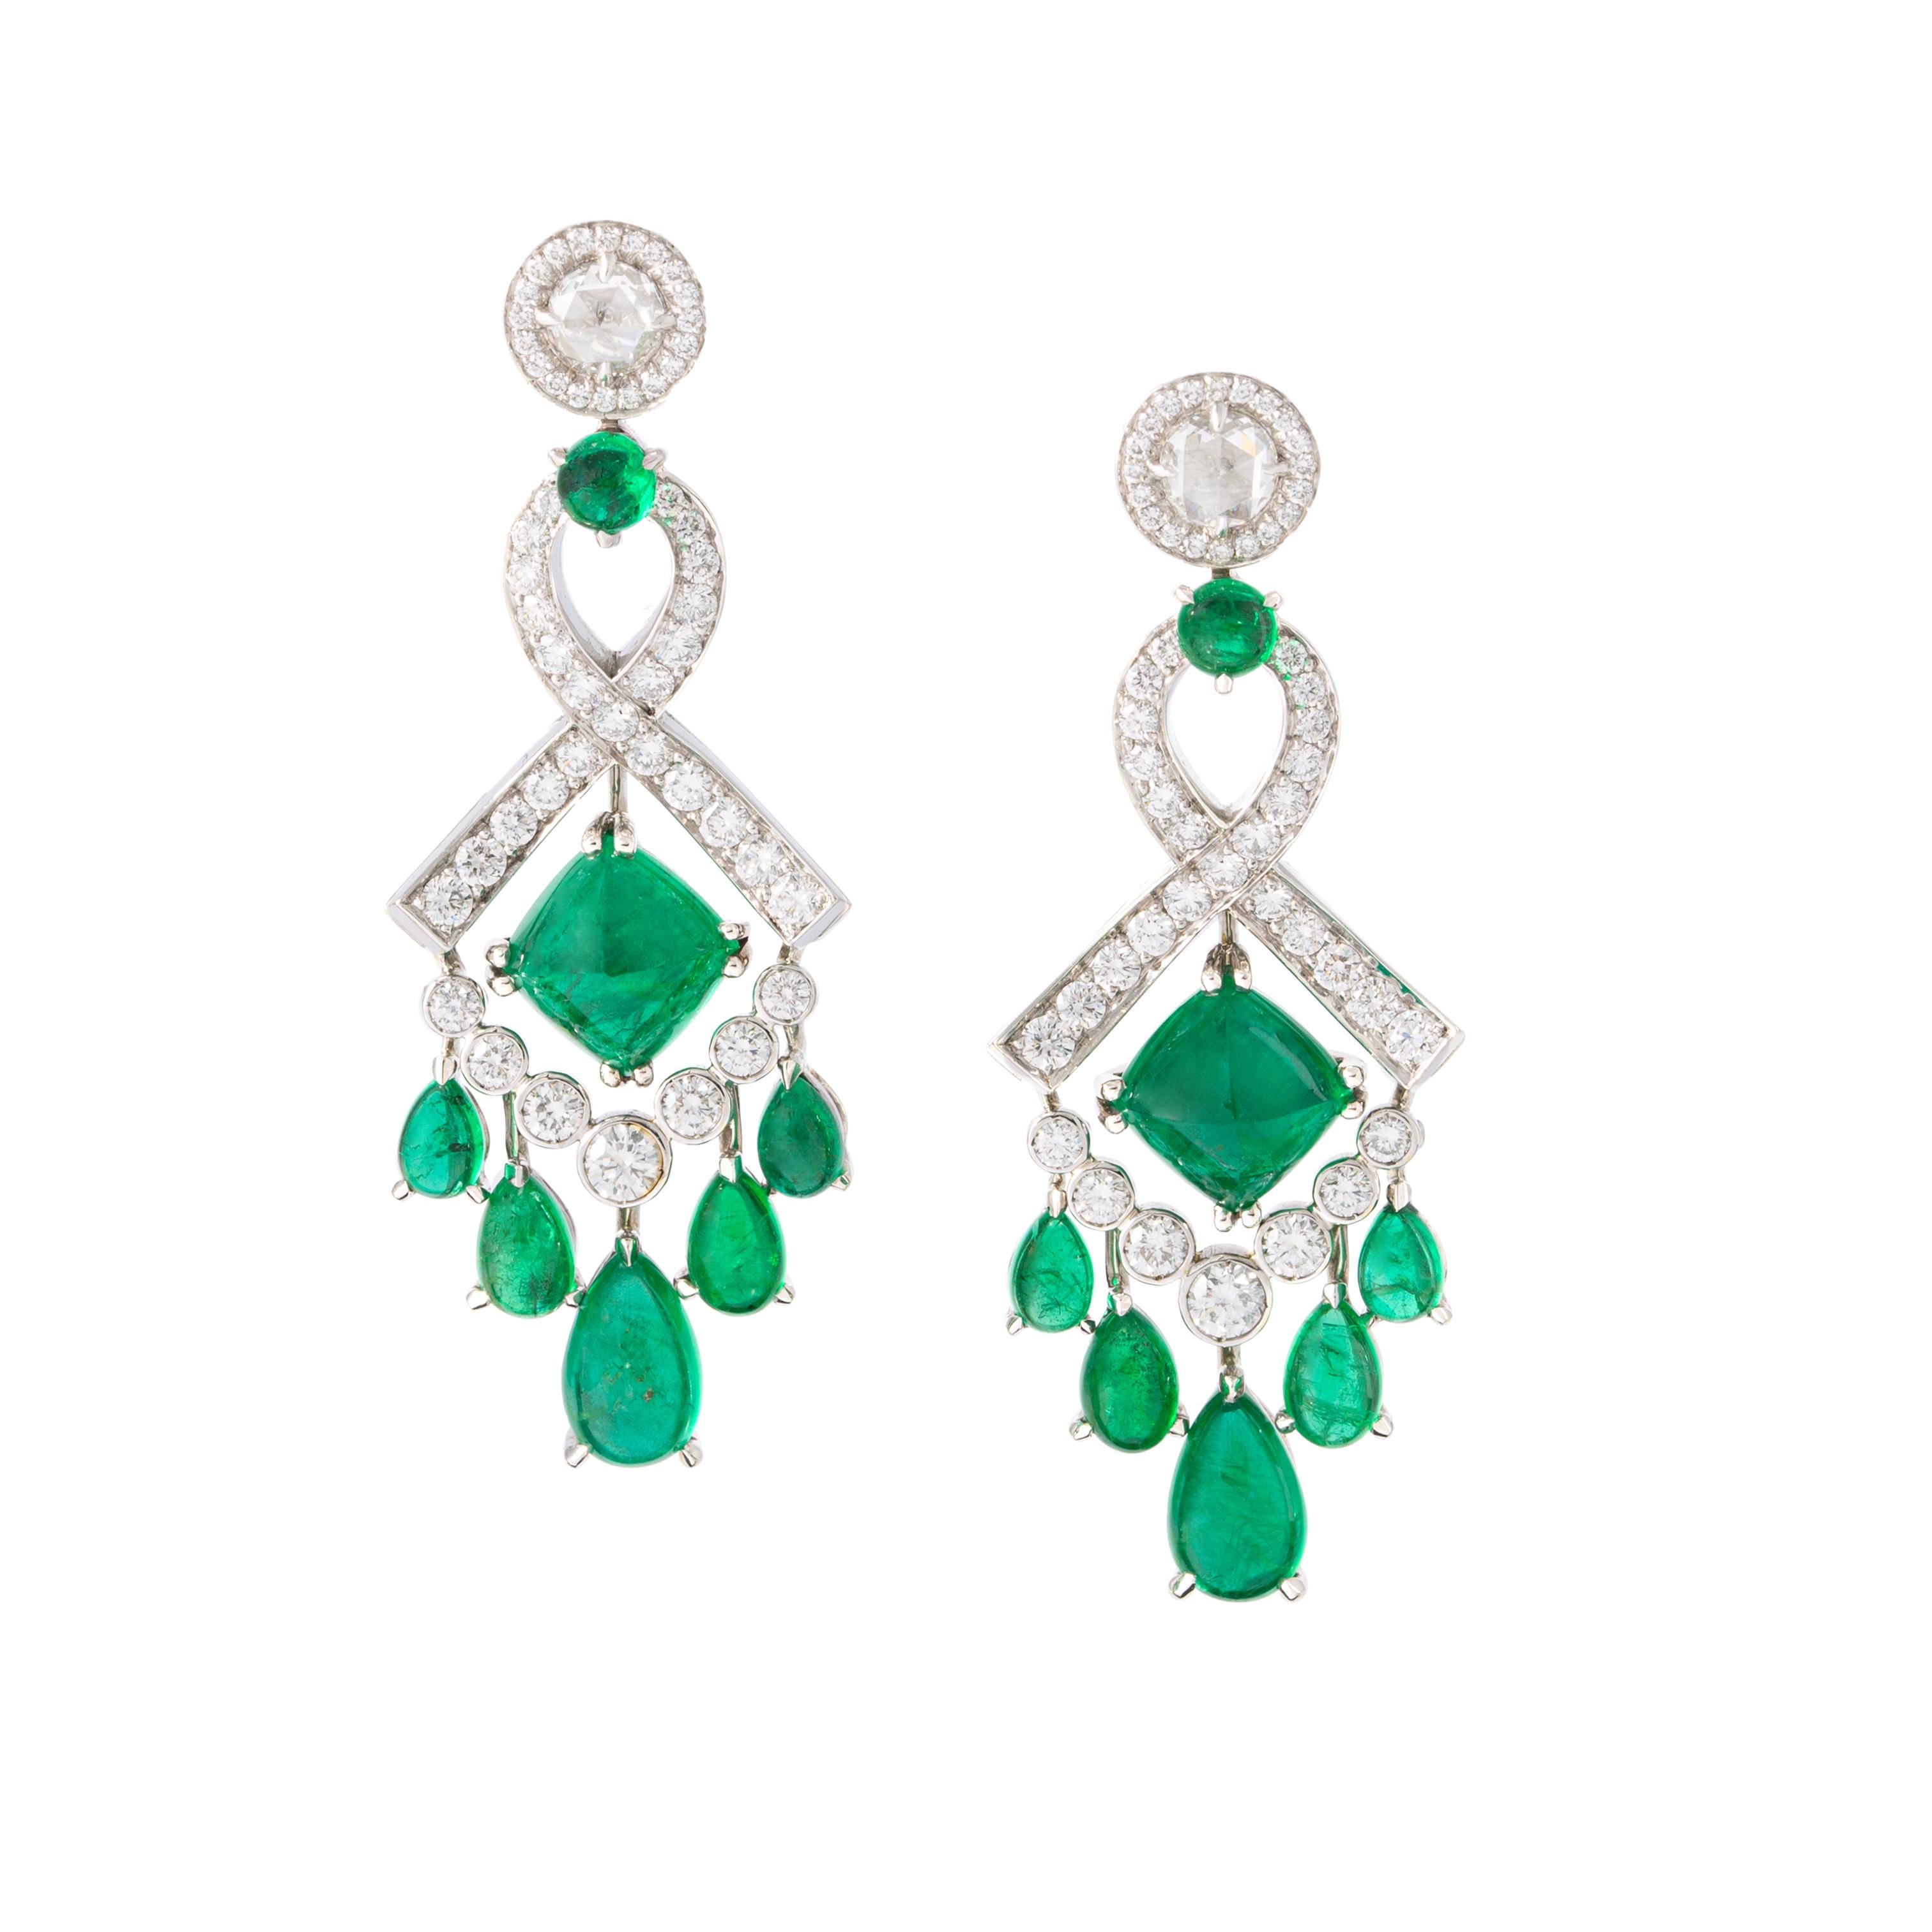 Fabergé Emerald Diamond White Gold 18K Earrings

Diamonds 2-Rose-0,58ct VS1,
Diamonds 2-Round-0,2ct VS1,
Diamonds 4-Round-0,18ct VS1,  
Diamonds 44-Round-0,86ct VS1, 
Diamonds 50-Round-0,19ct.

Gross weight: 16.57 grams.

Length: 4.50 cm
Width: max.